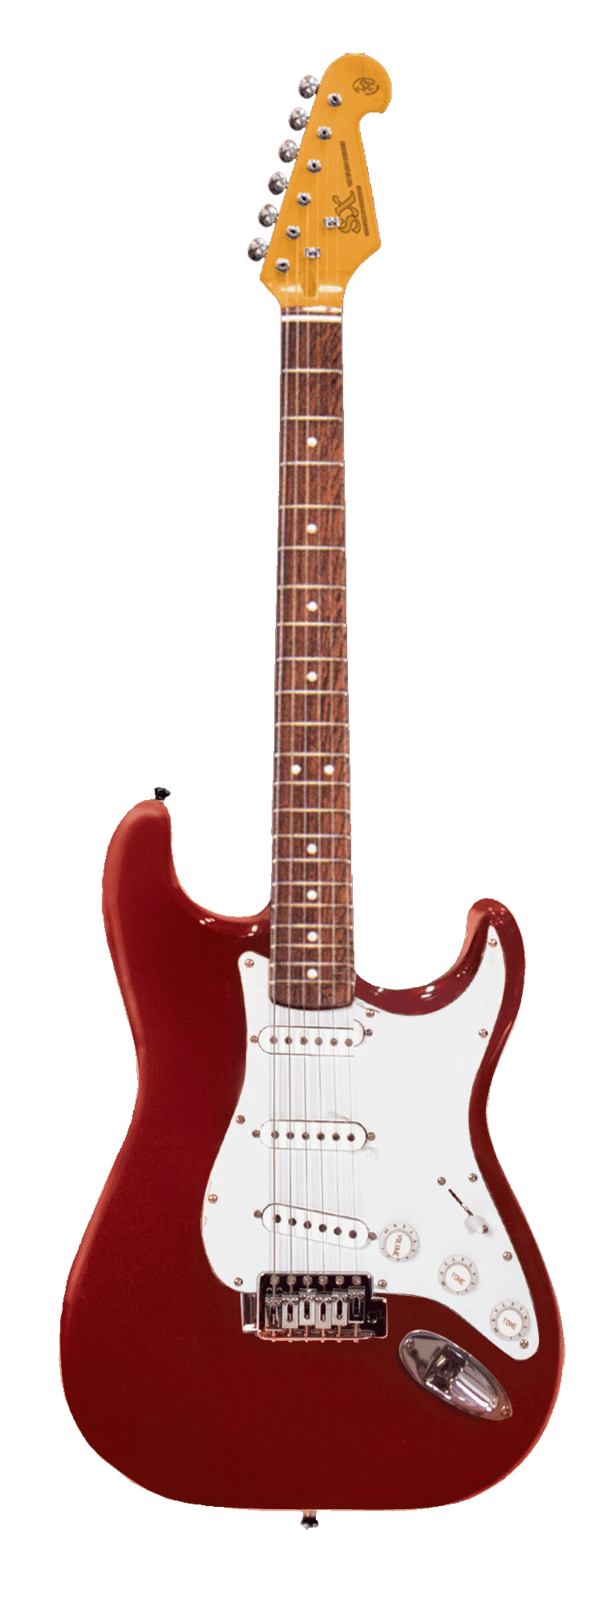 Essex VES62CAR Vintage Series Electric Guitar Candy Apple Red w/ Bag